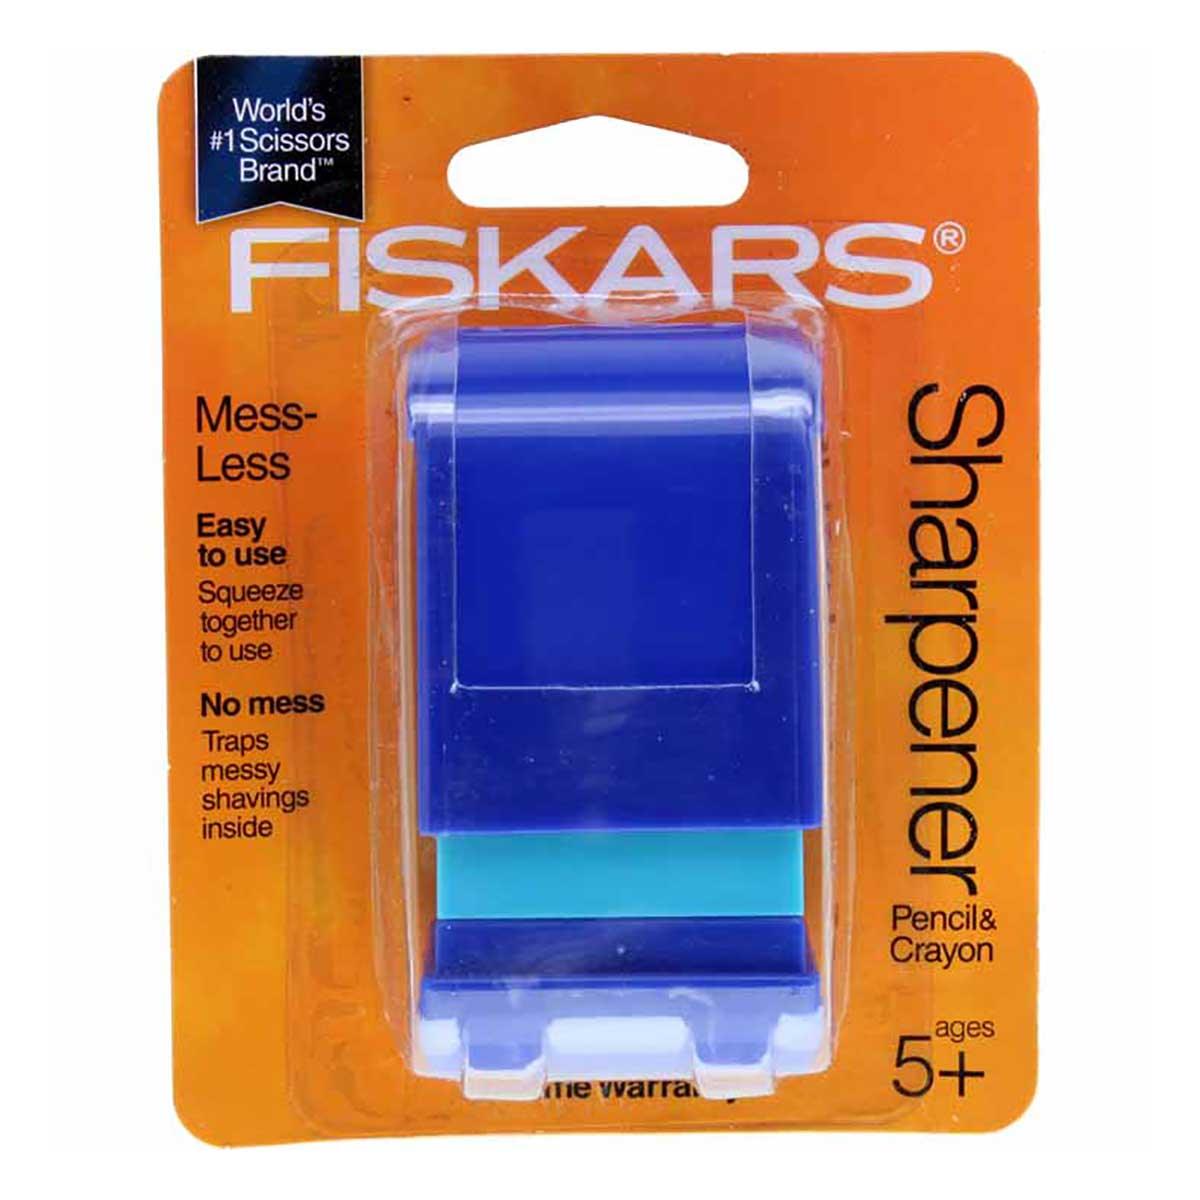 Fiskars Squeeze Sharpener for Pencils/Crayons $1.49 (Assorted